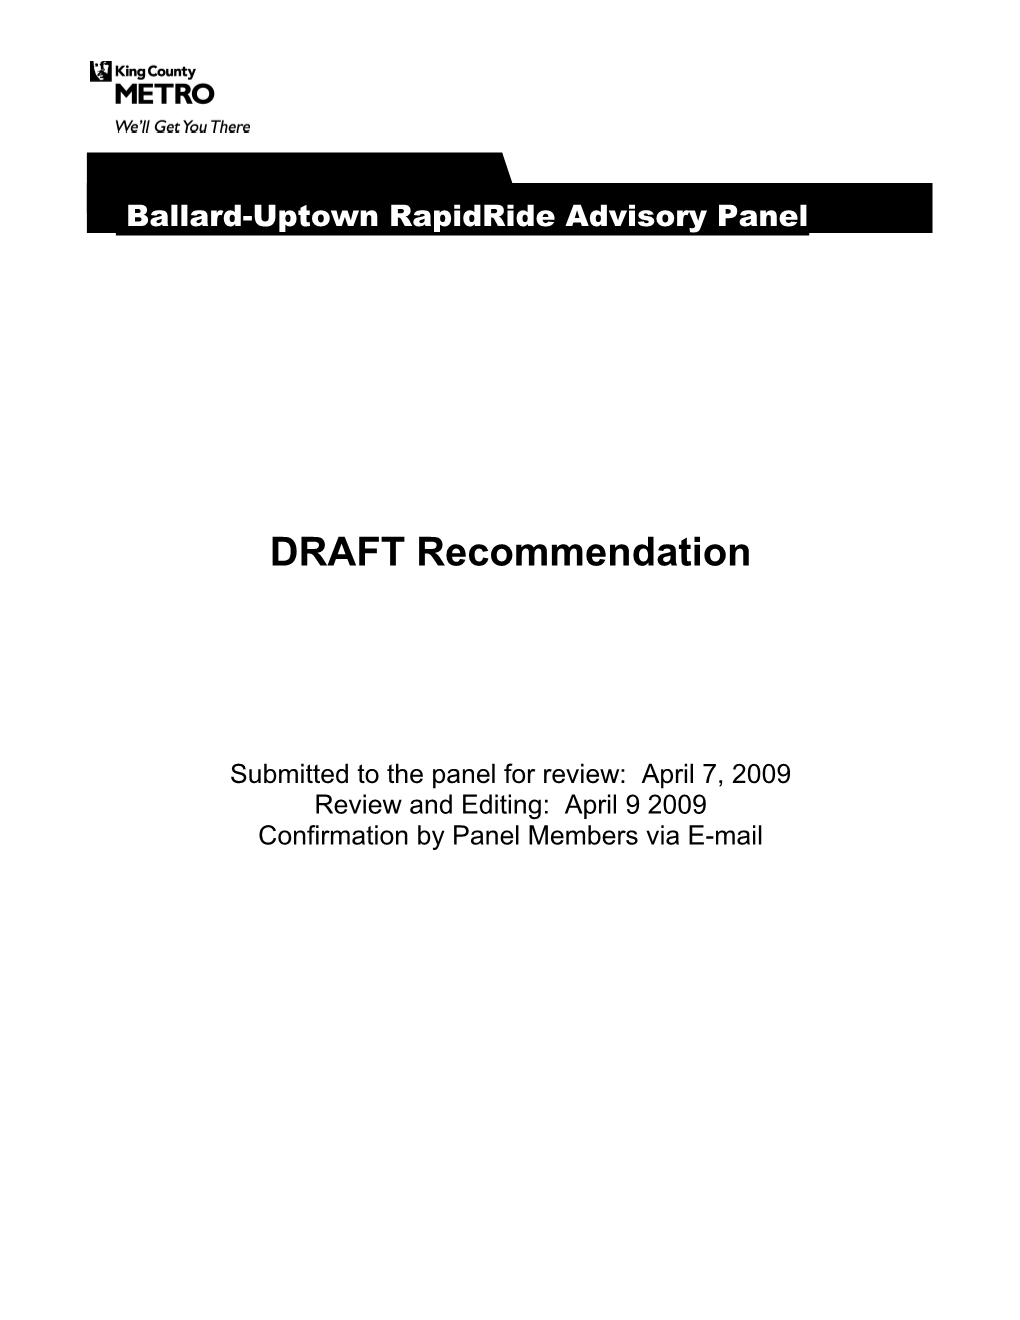 Ballard-Uptown Rapidride Advisory Panel